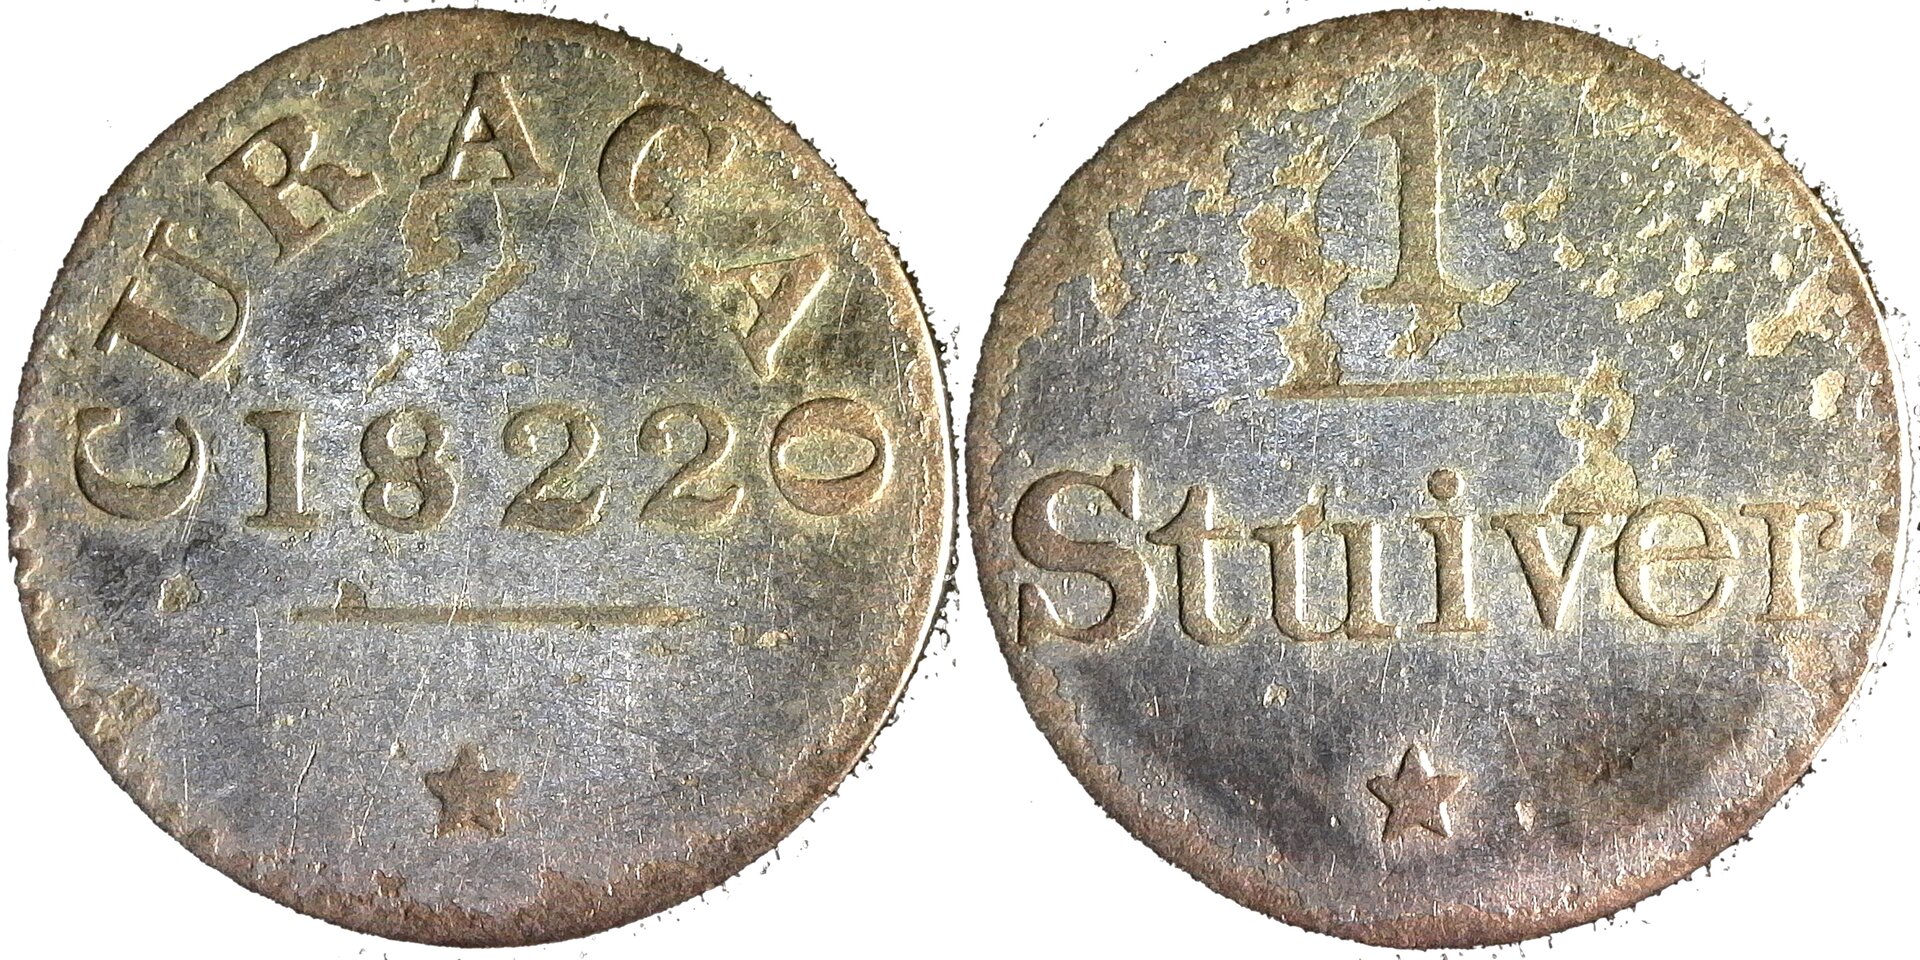 CURACAO, 1 stuiver, 1822, silver, KM266 obvb-side-cutout.jpg